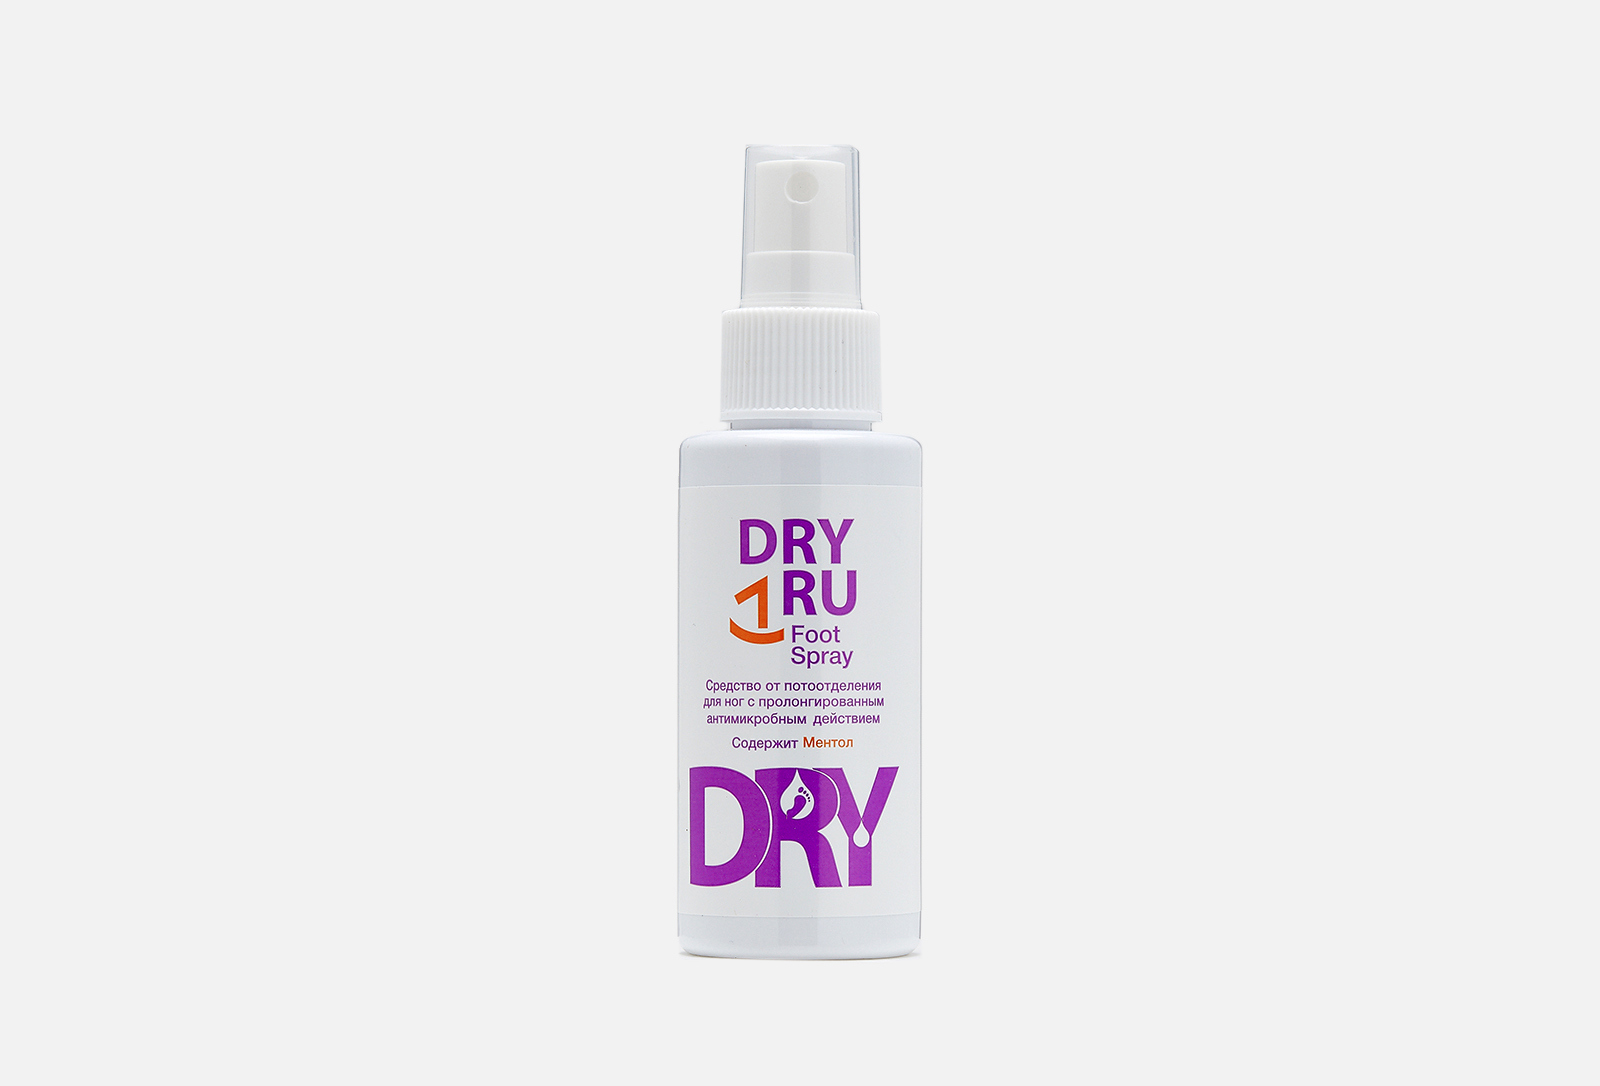 Dry dry foot. Dry ru foot Spray. Антиперспирант для ног Dry ru foot Spray. Средство от потливости. Драй драй спрей.